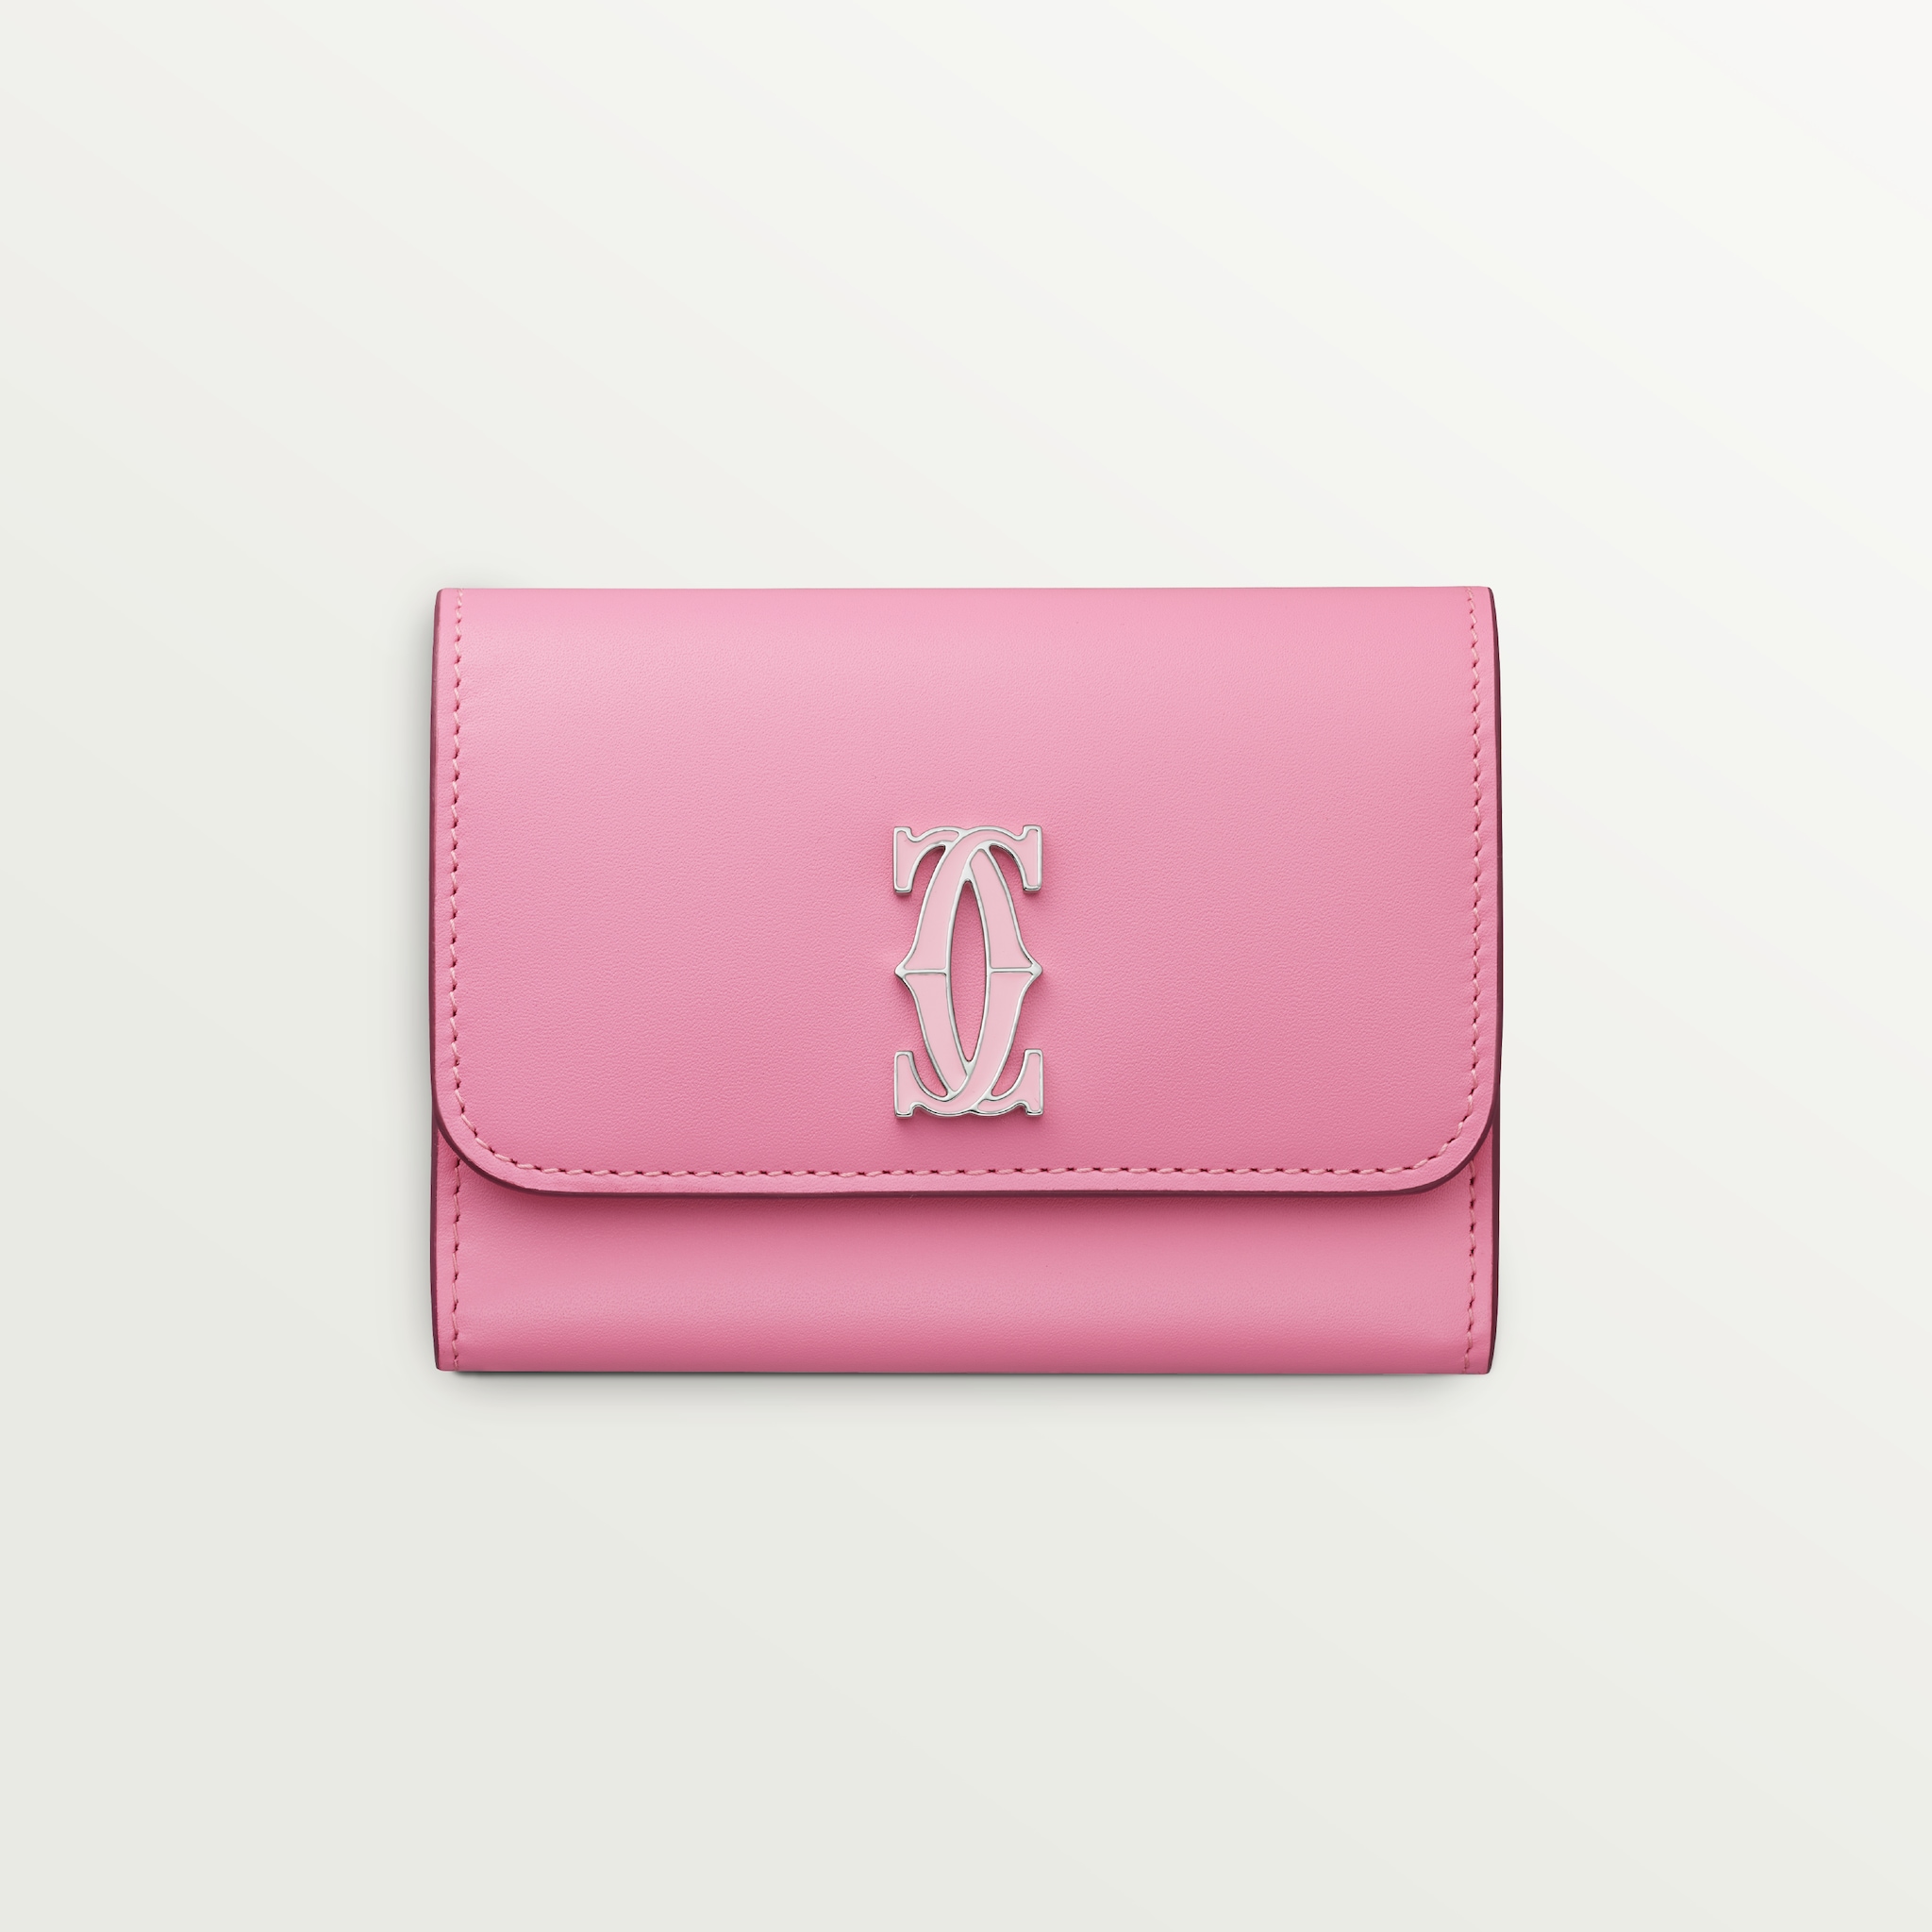 Mini wallet, C de CartierTwo-tone pink/pale pink calfskin, palladium and pale pink enamel finish